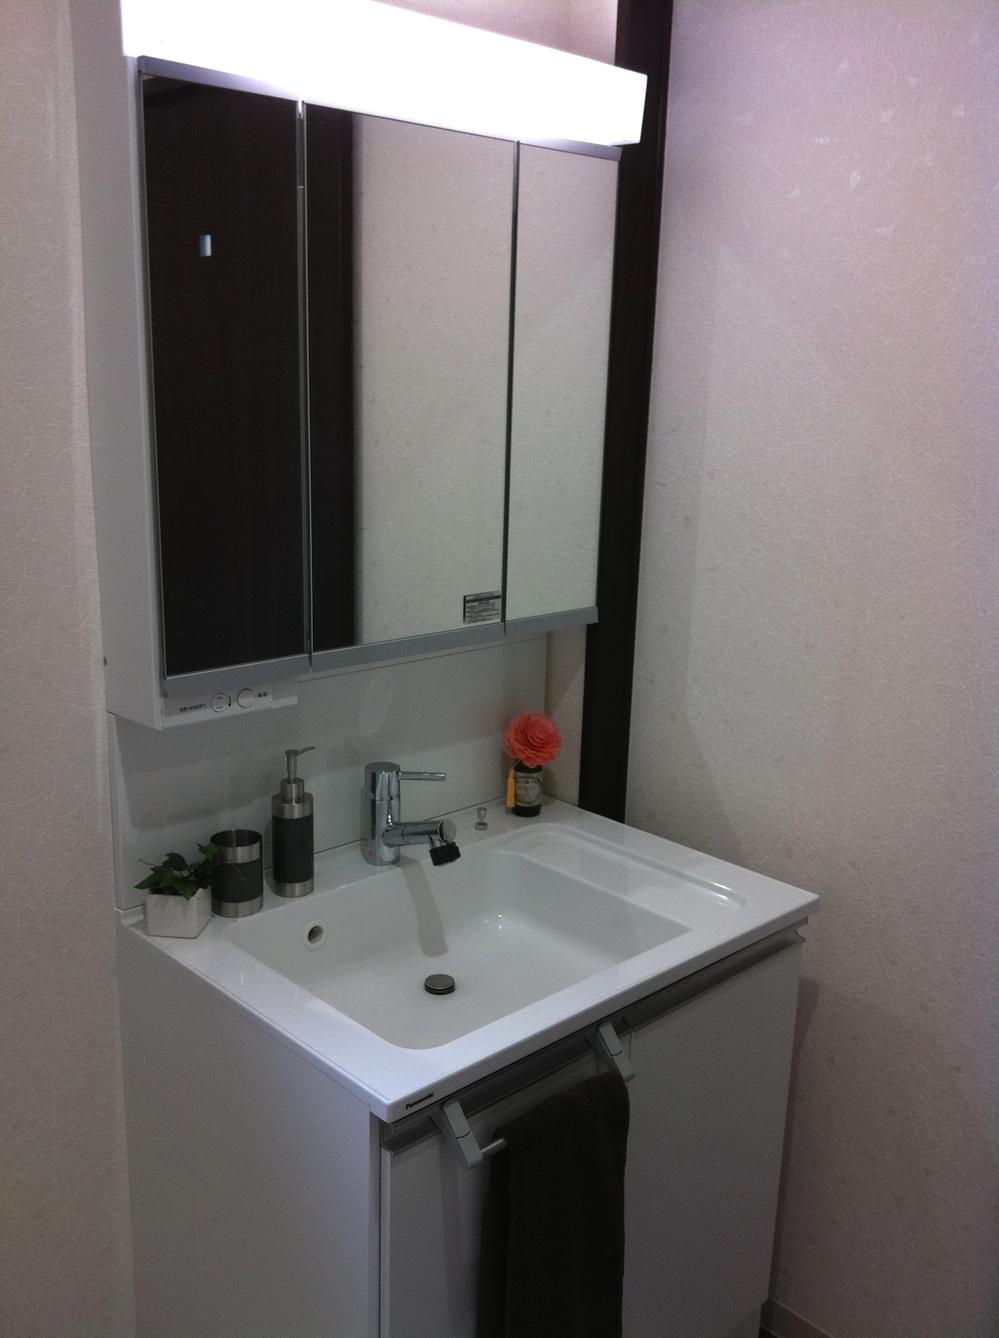 Wash basin, toilet. No. 6 place wash room (September 2013) Shooting